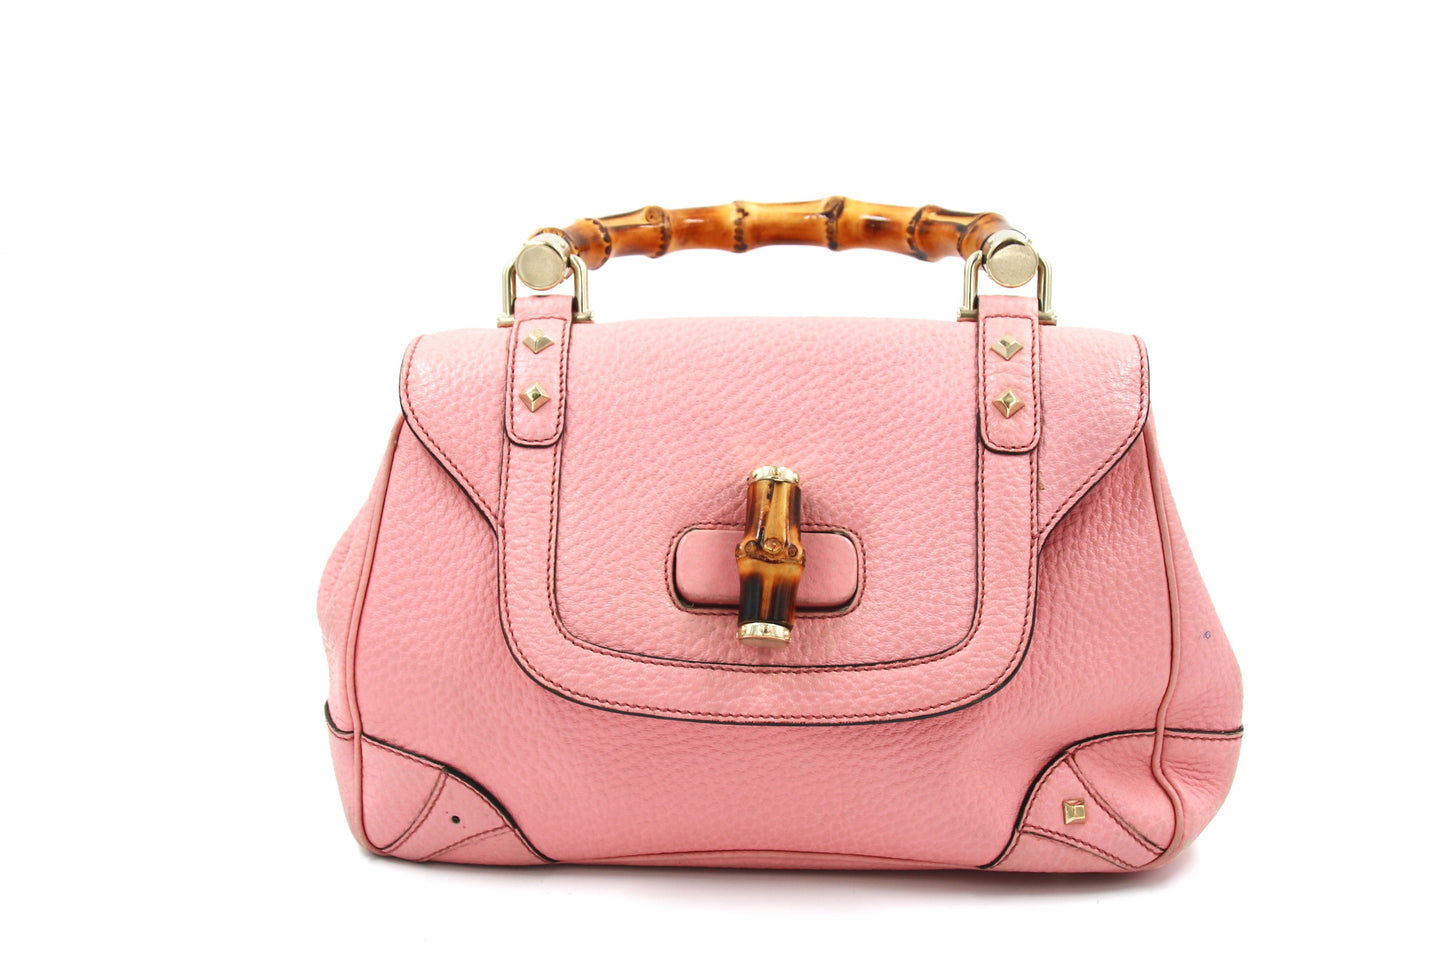 GUCCI Bamboo Top Handle Pink Leather Medium Bag